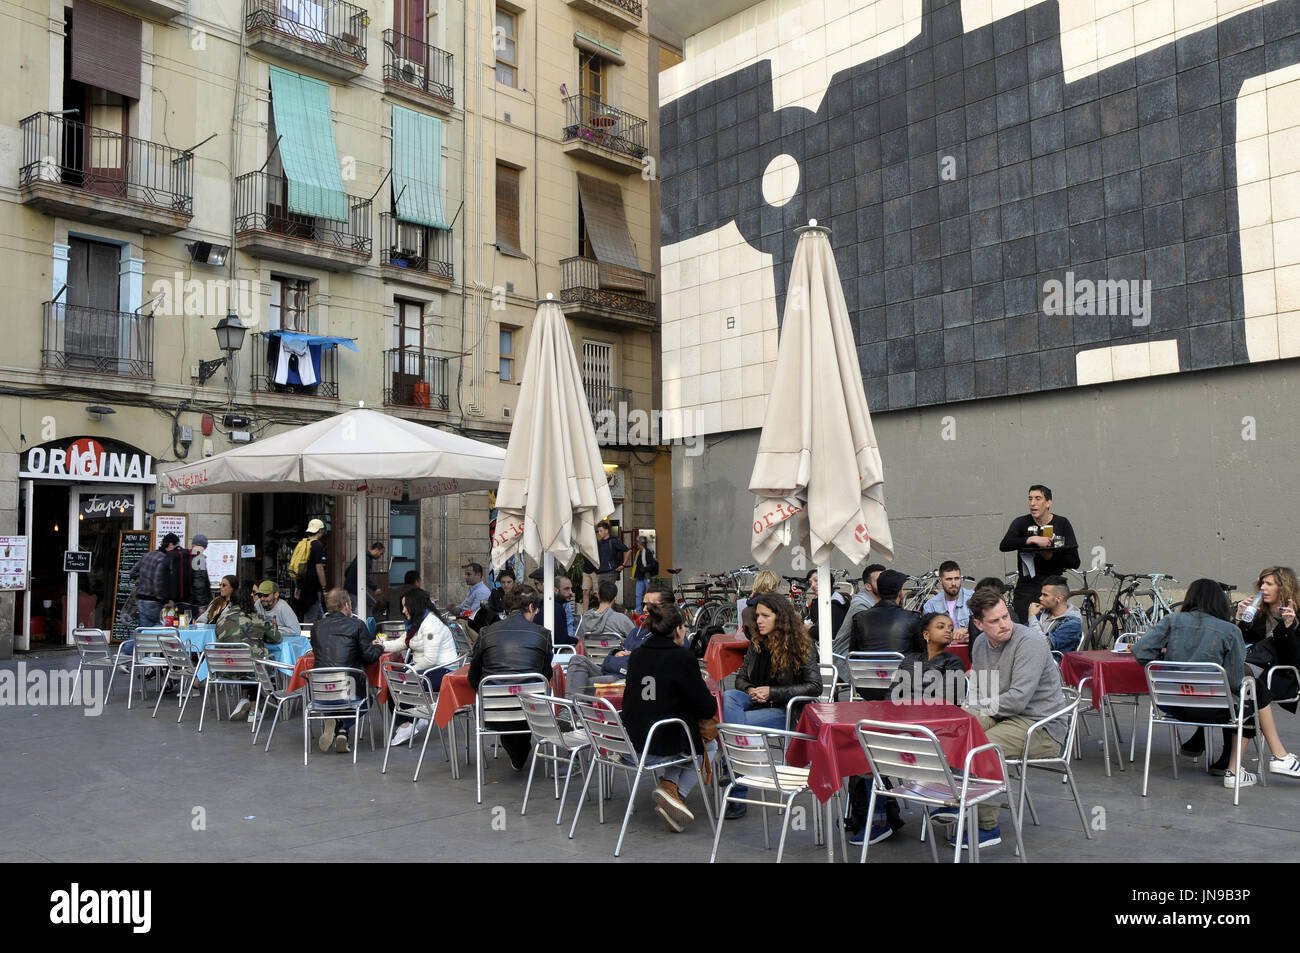 ORIGINAL Bar Terrasse im Hof des MACBA Museum. Barcelona. Spanien. Foto: Rosmi Duaso Stockfoto